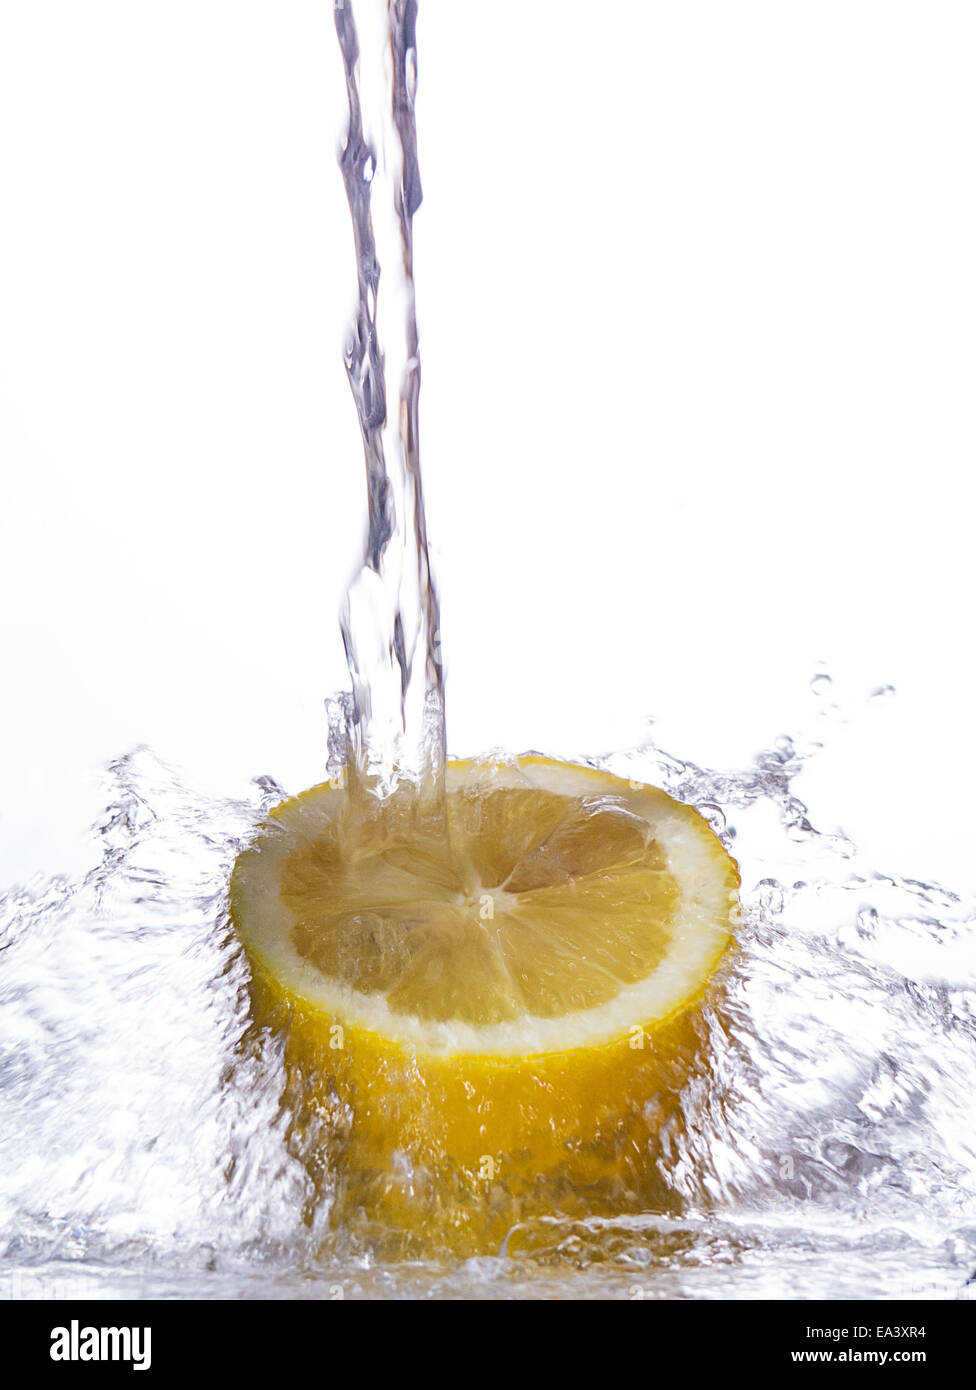 Jet of water on a lemon Stock Photo